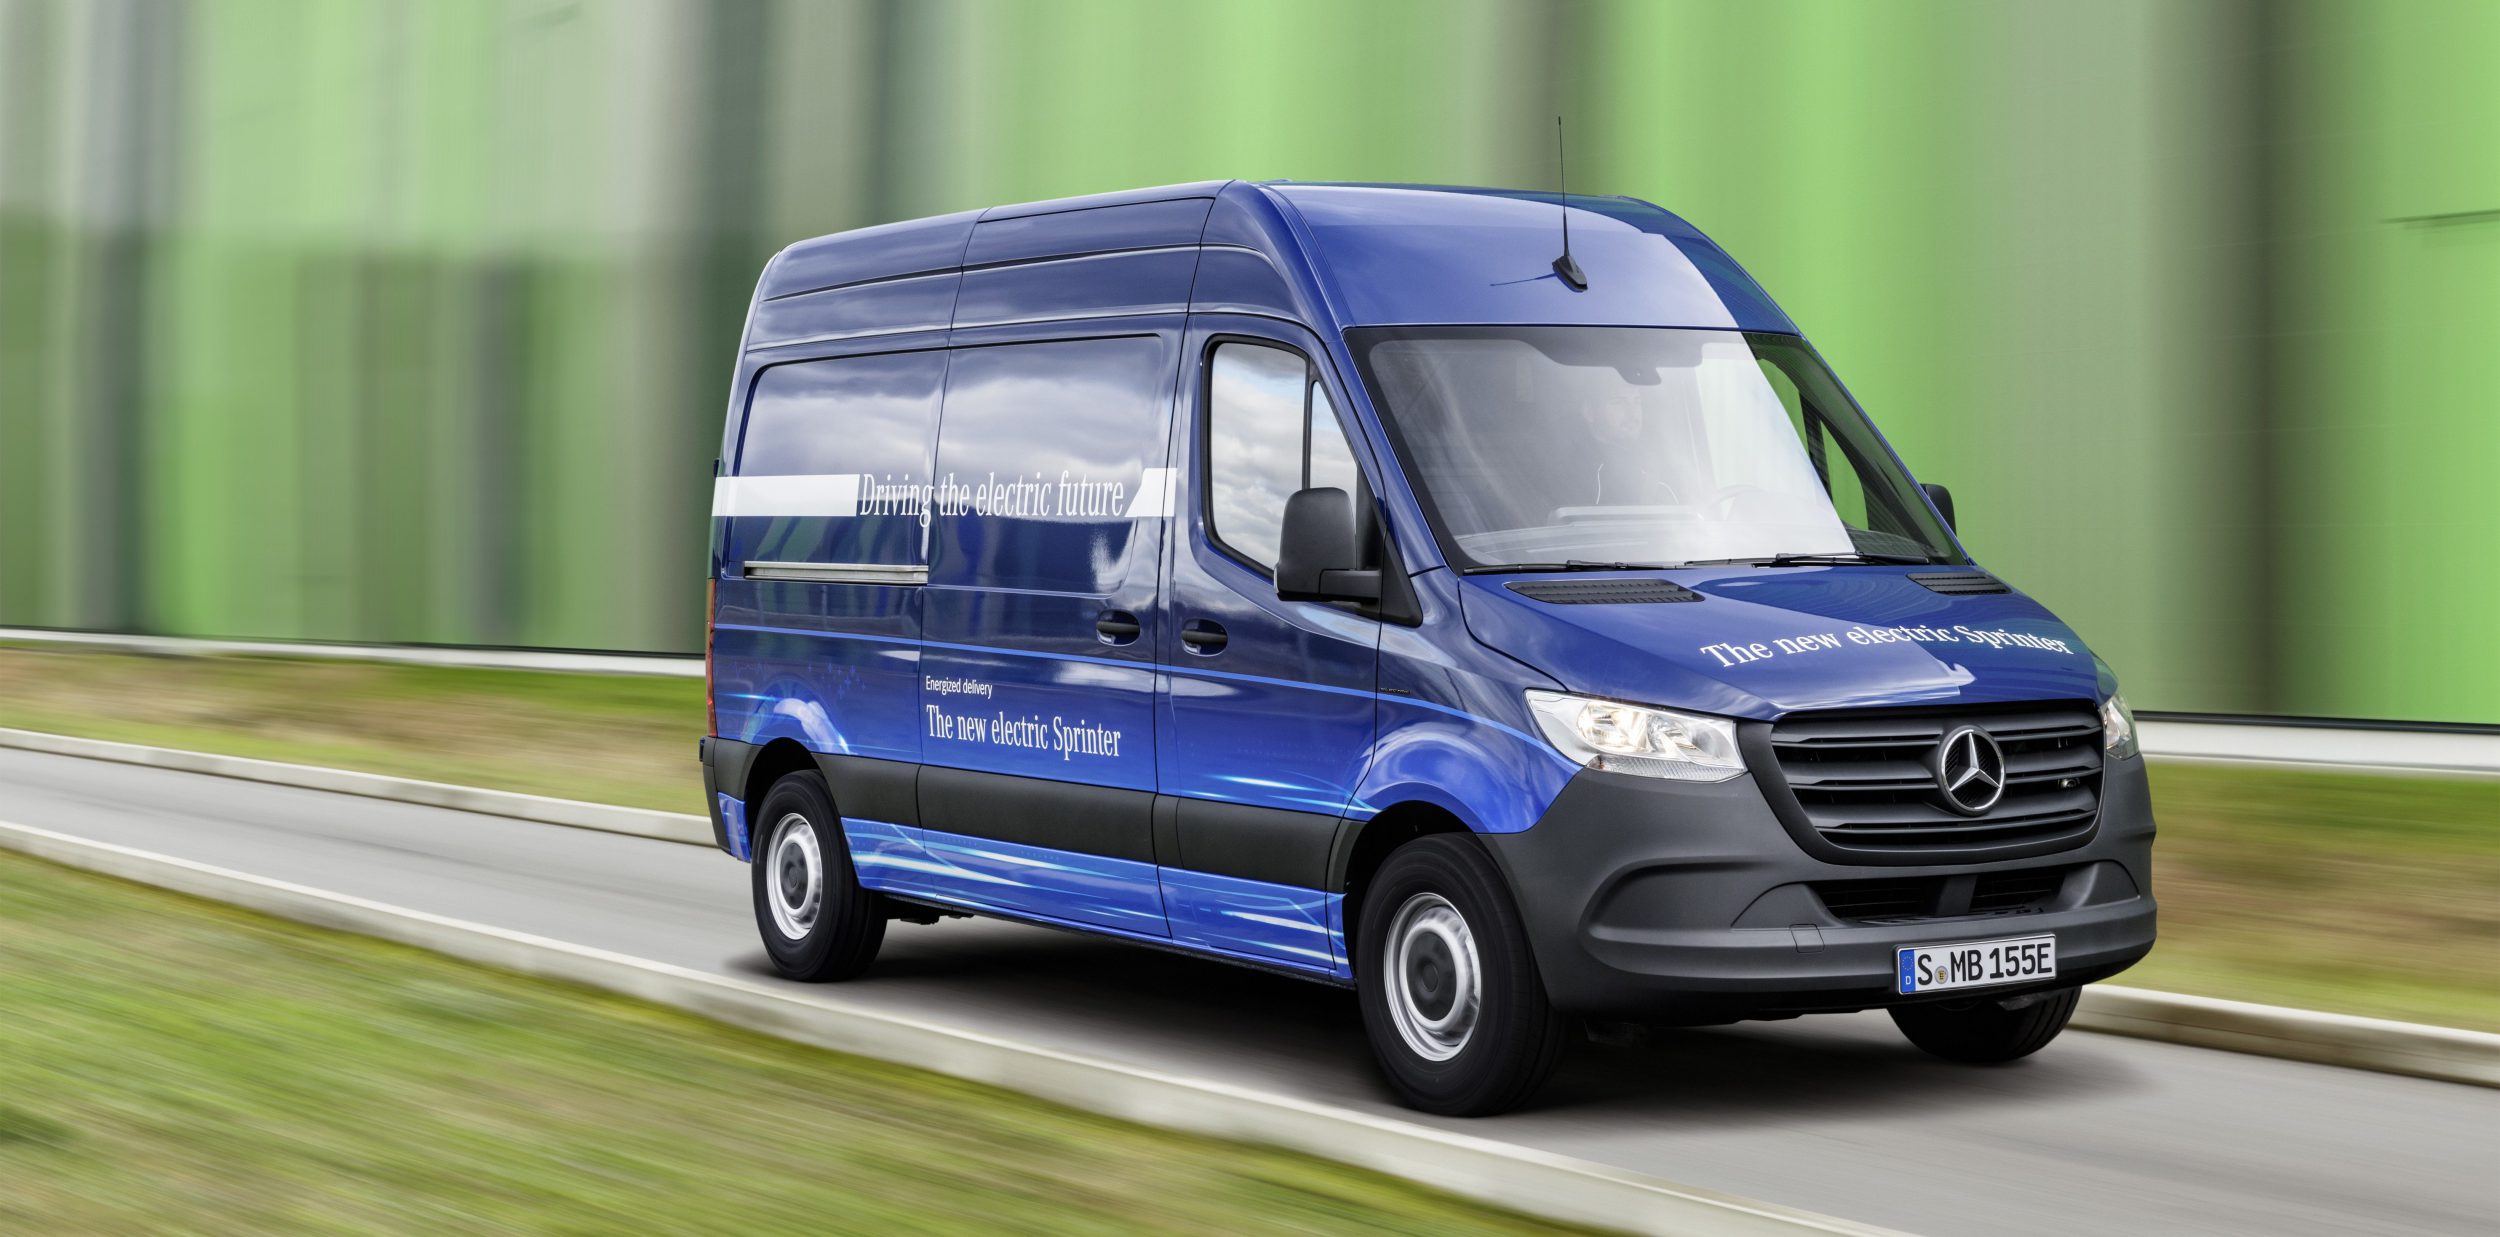 Mercedes-Benz unveils new eSprinter all-electric van with specs: 150 km of range and 1000 kg payload | Electrek